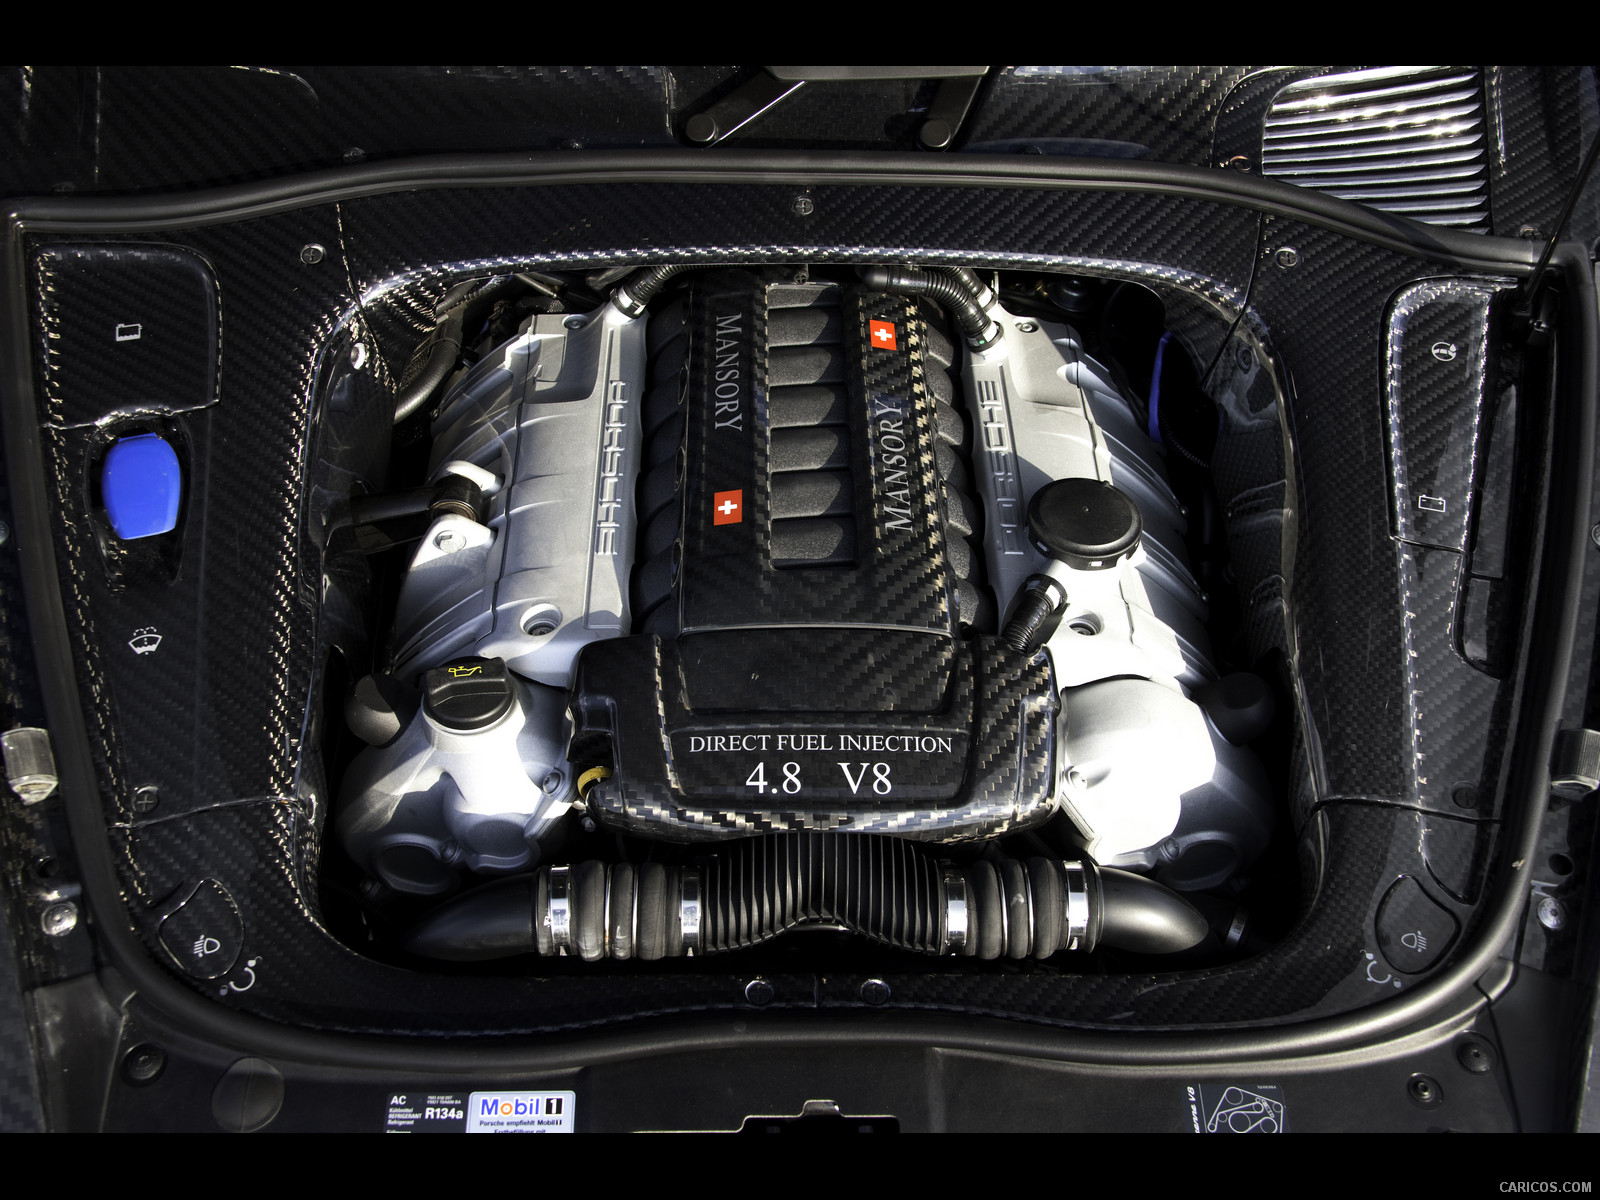 2009 Mansory Chopster based on Porsche Cayenne Turbo S  - Engine, #37 of 38